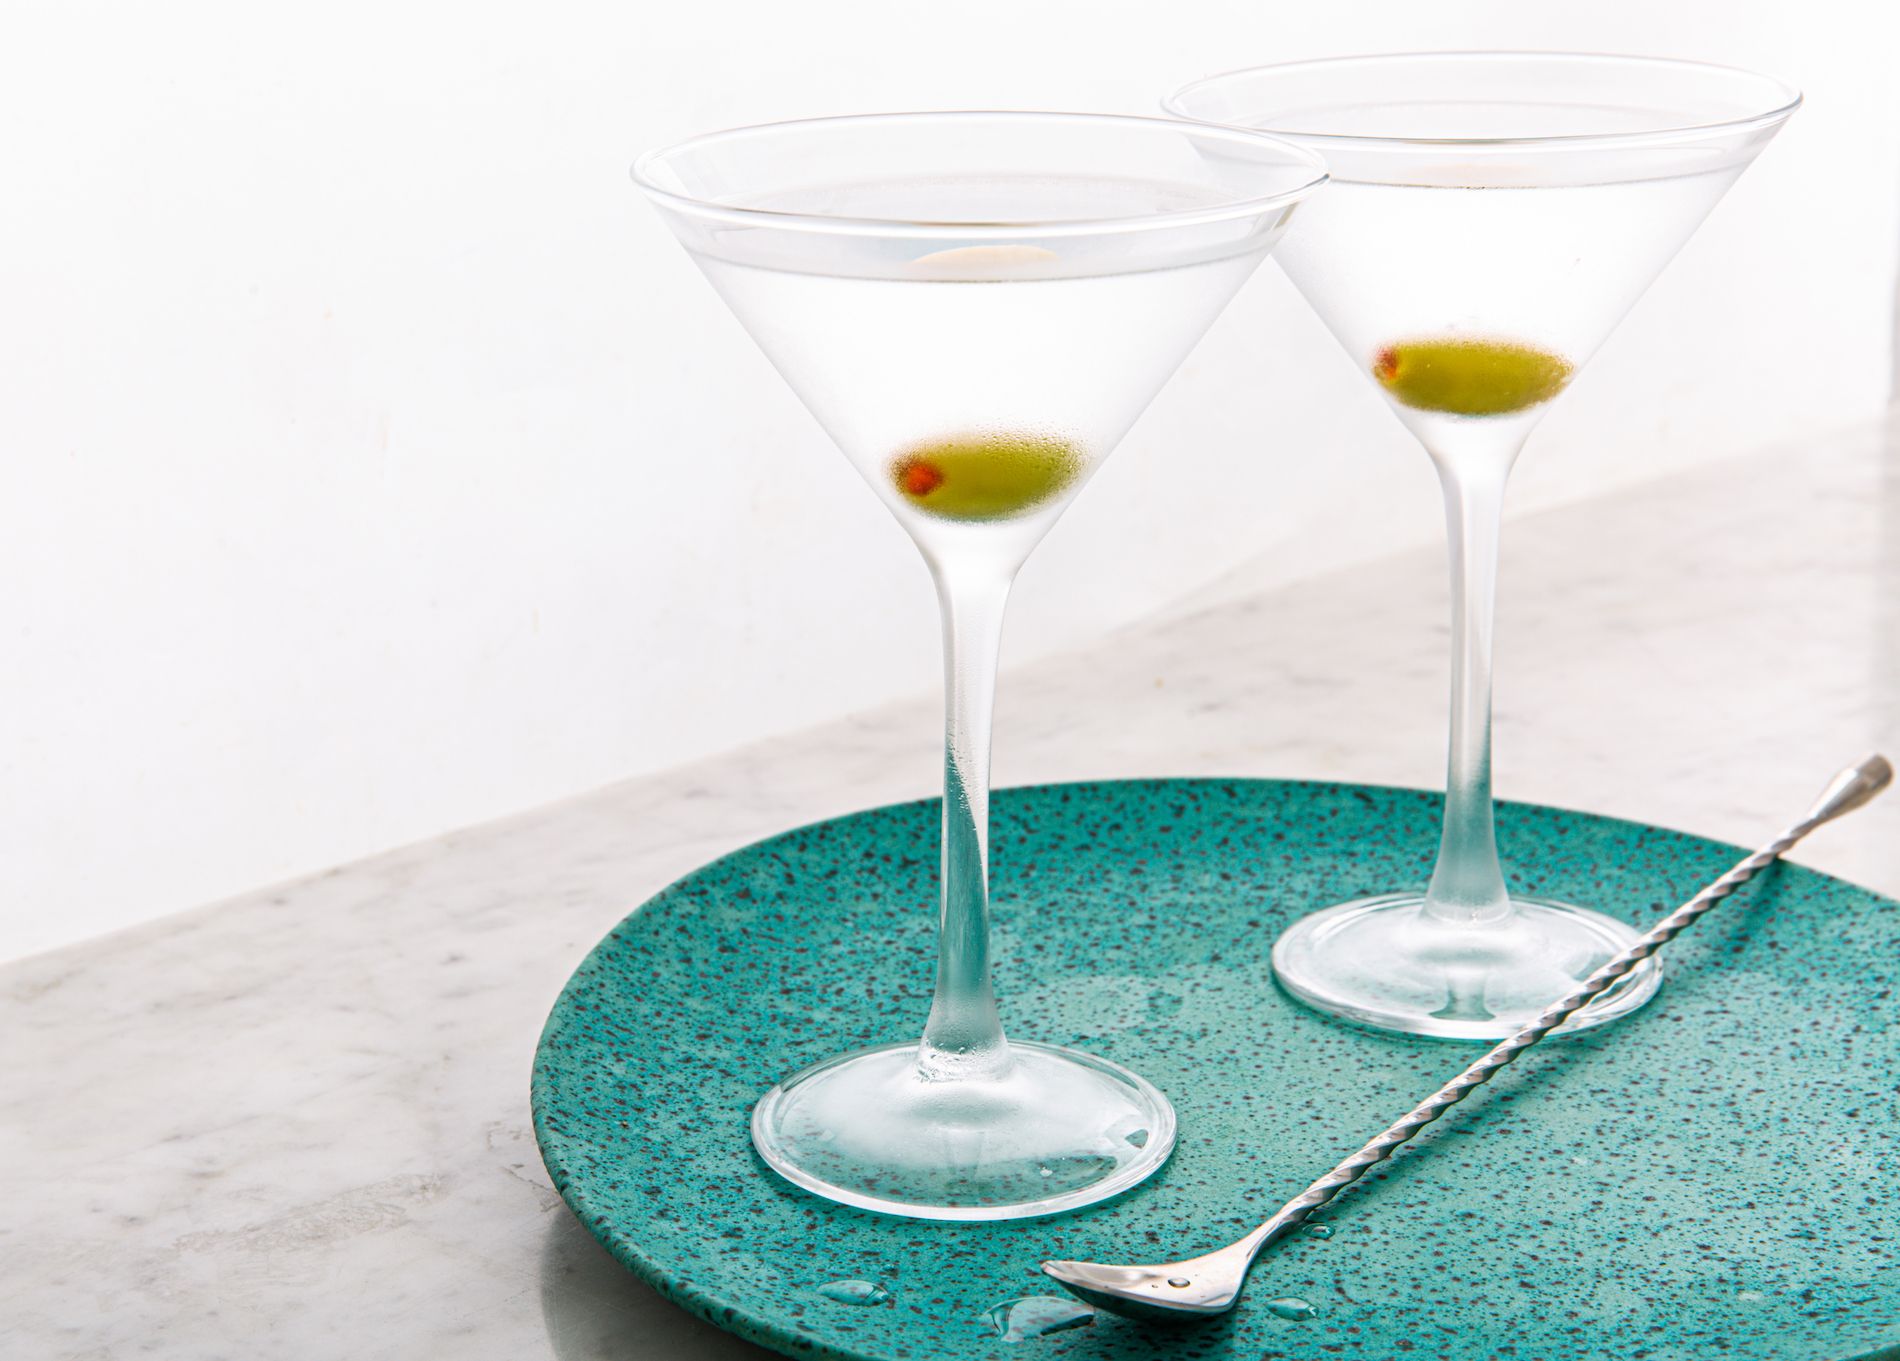 Recette de Dry Martini classique